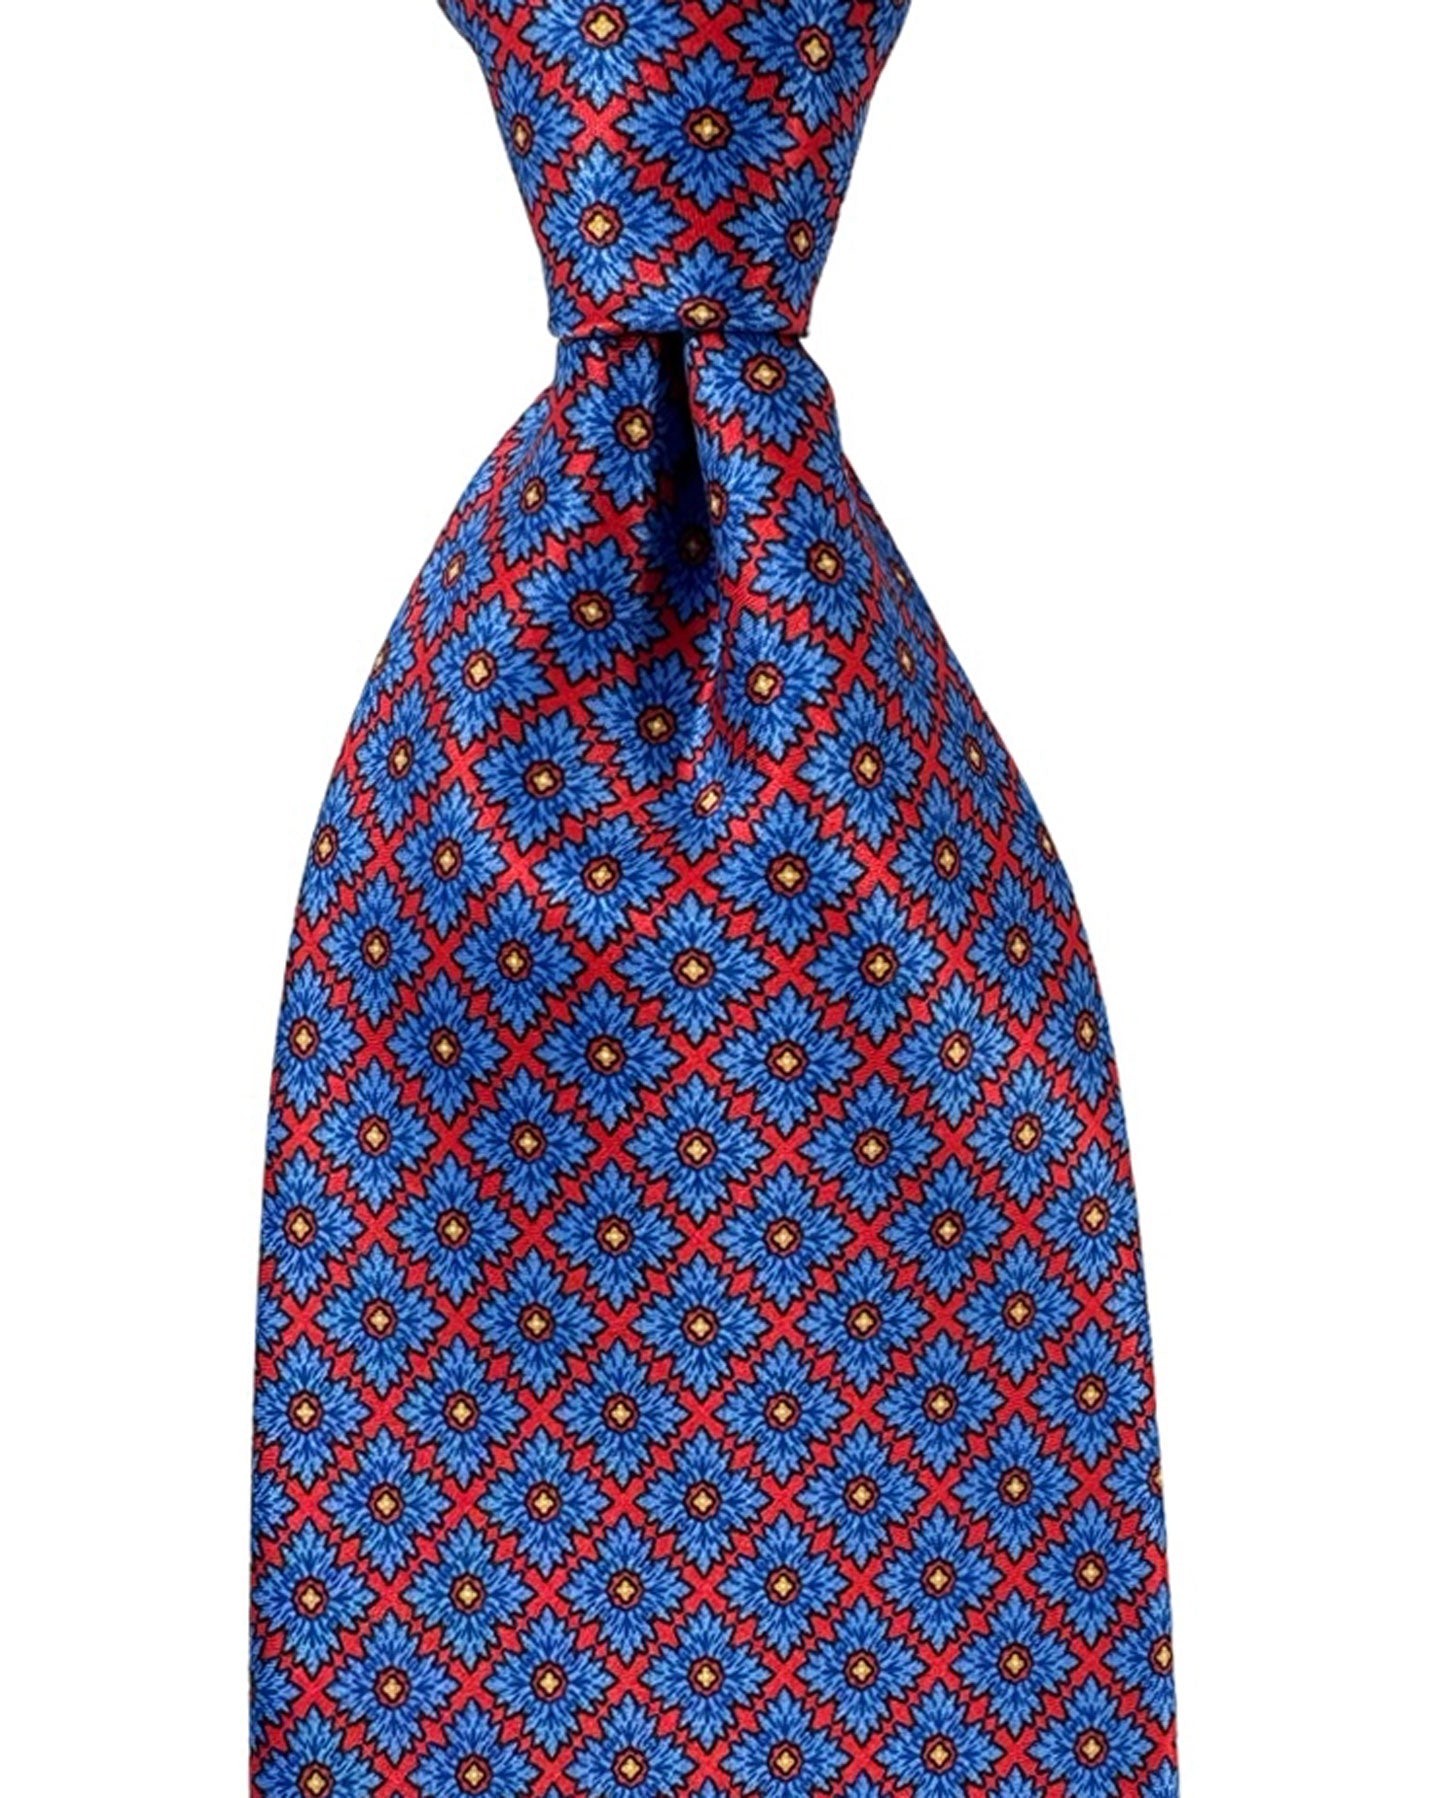 Stefano Ricci Silk Tie Royal Blue Red Floral Design